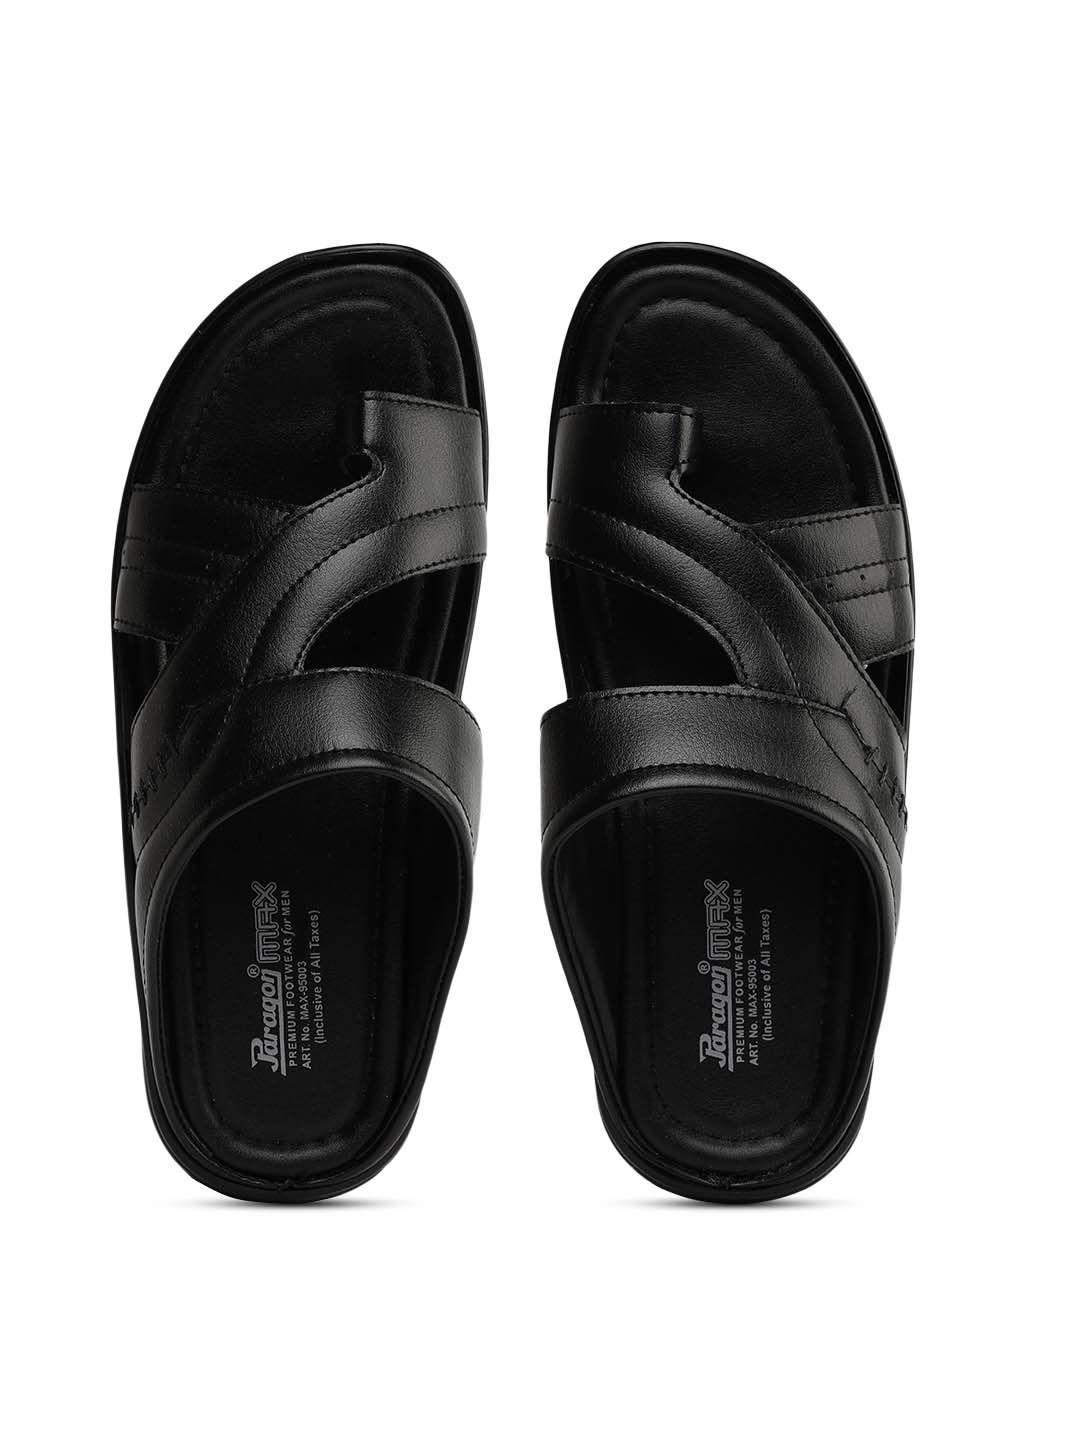 paragon-men-black-solid-comfort-sandals